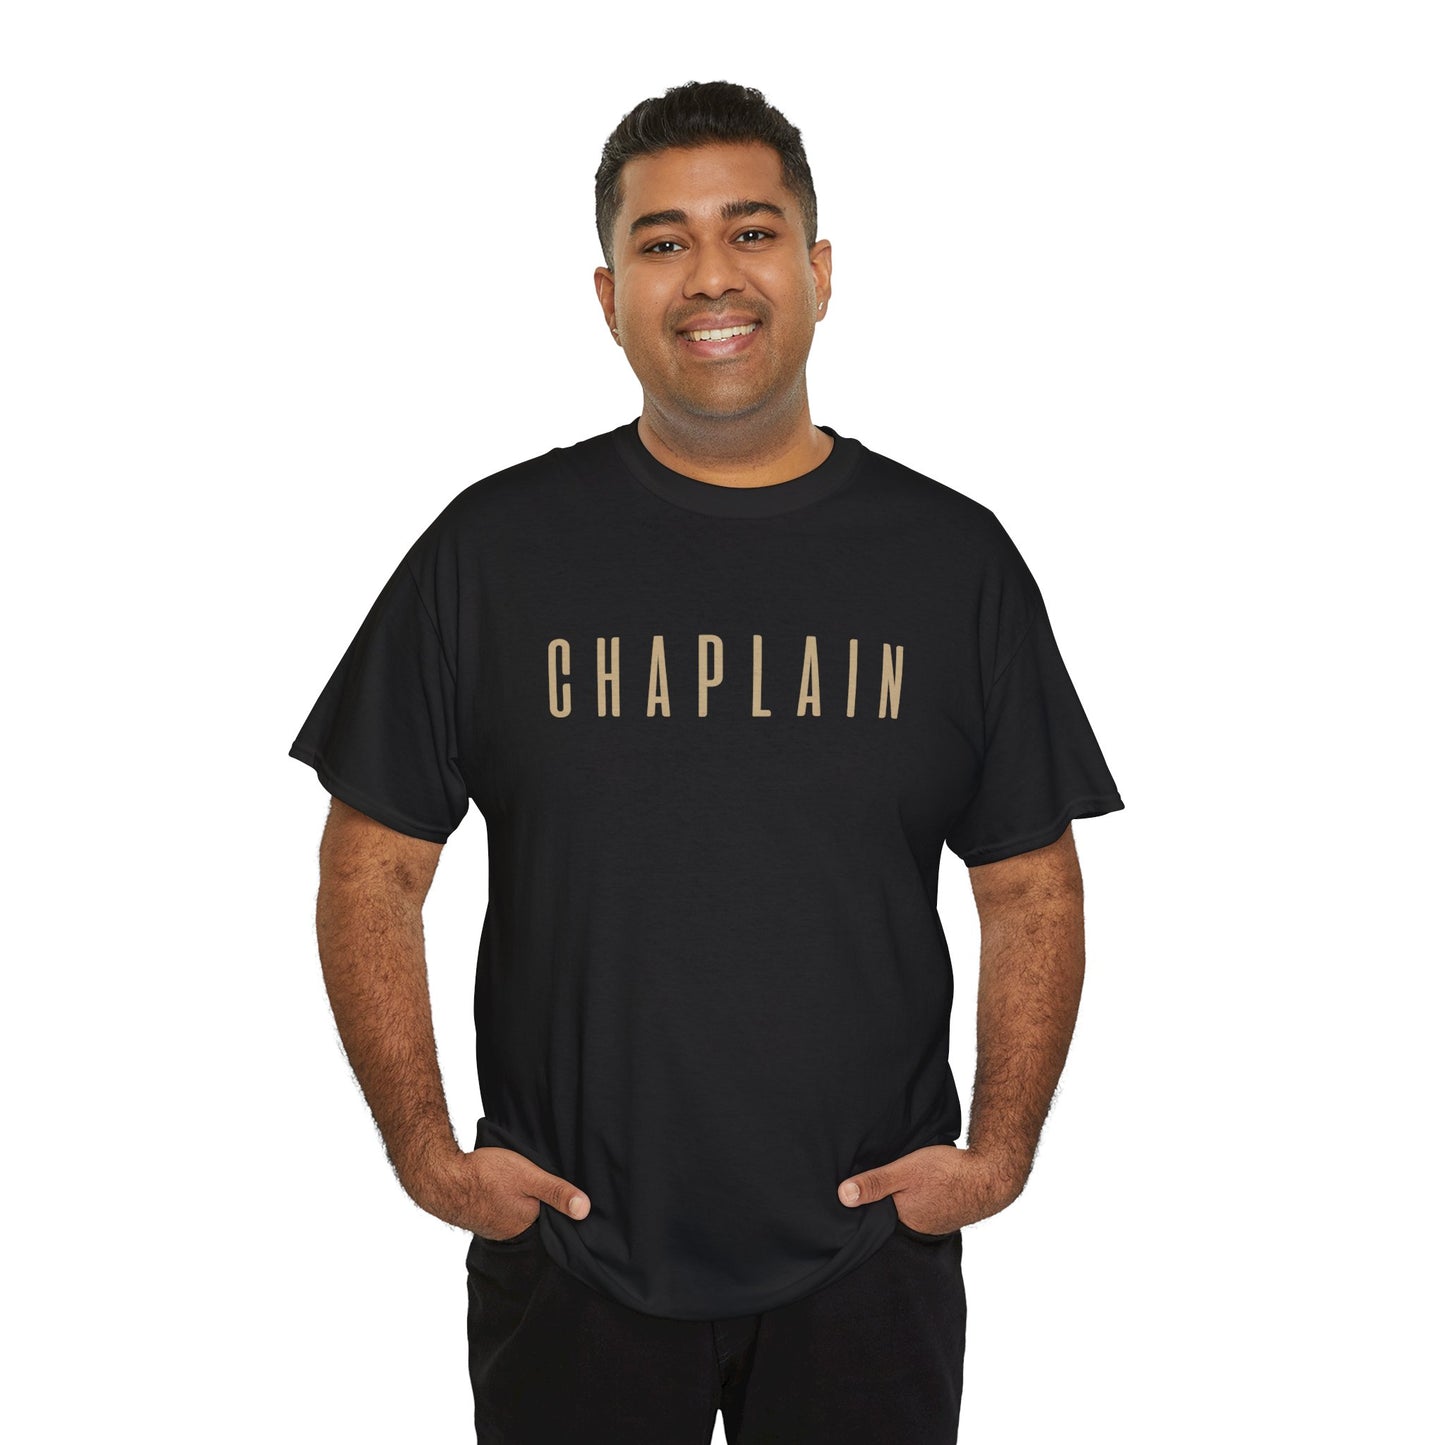 CHAPLAIN by Chaplain Life®